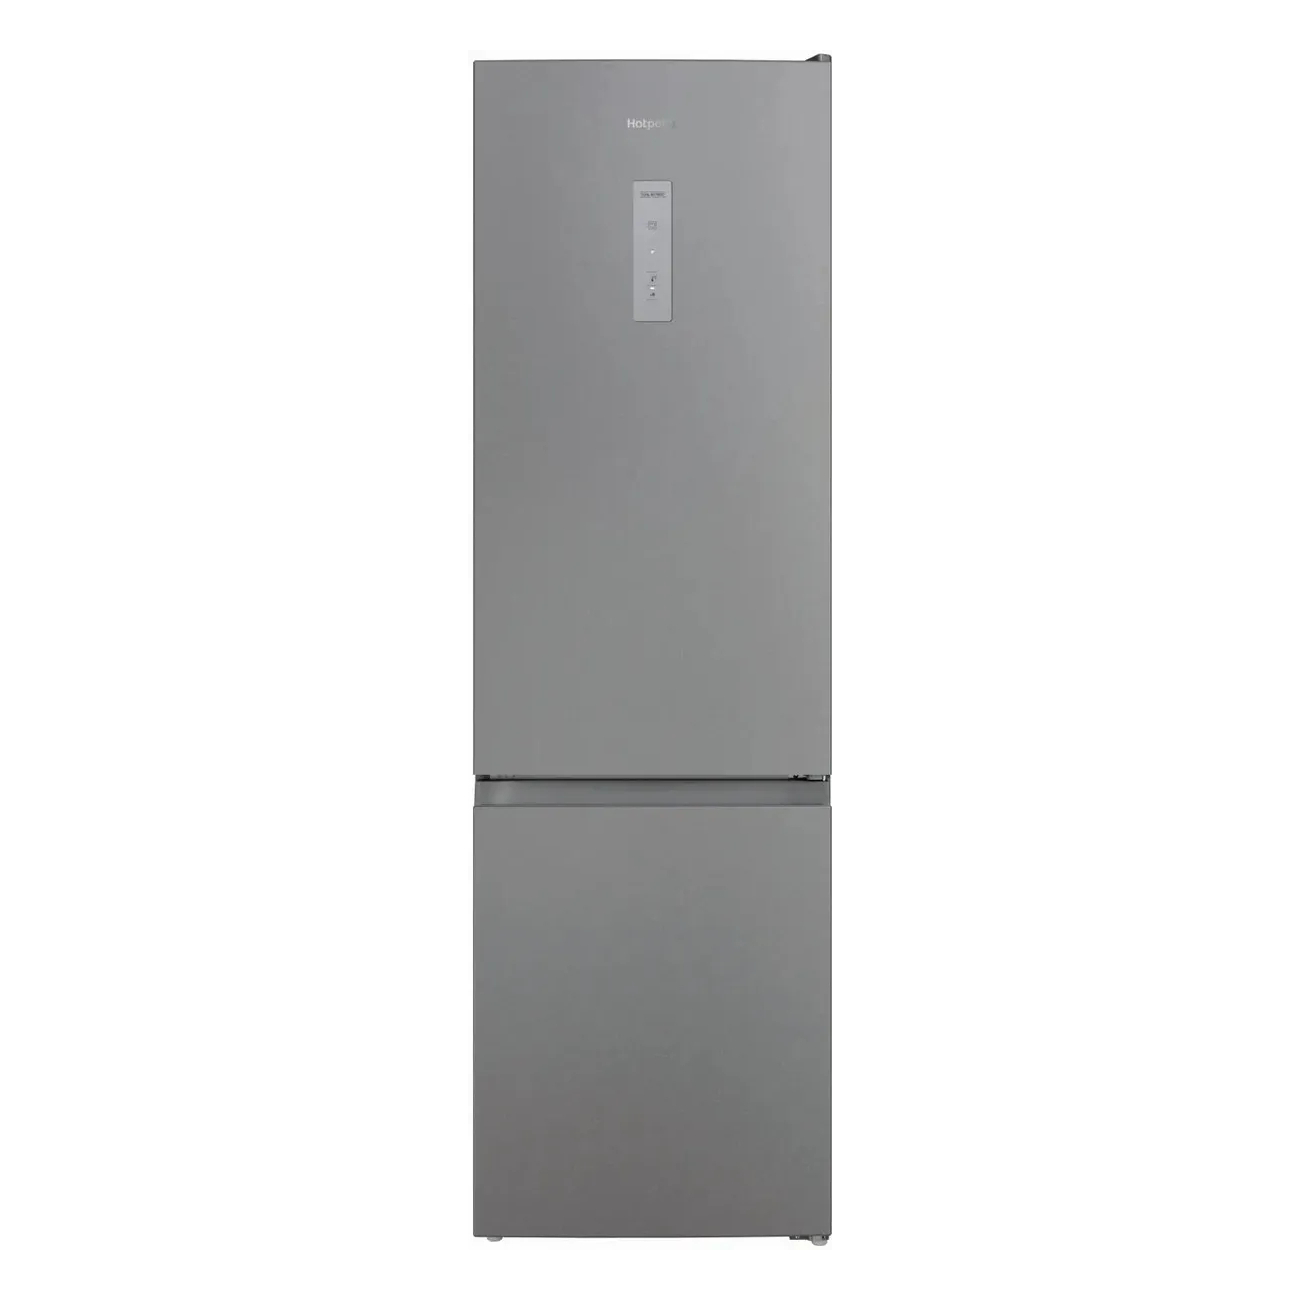 Холодильник HotPoint HT 5200 S серебристый двухкамерный холодильник hotpoint hts 5200 s серебристый